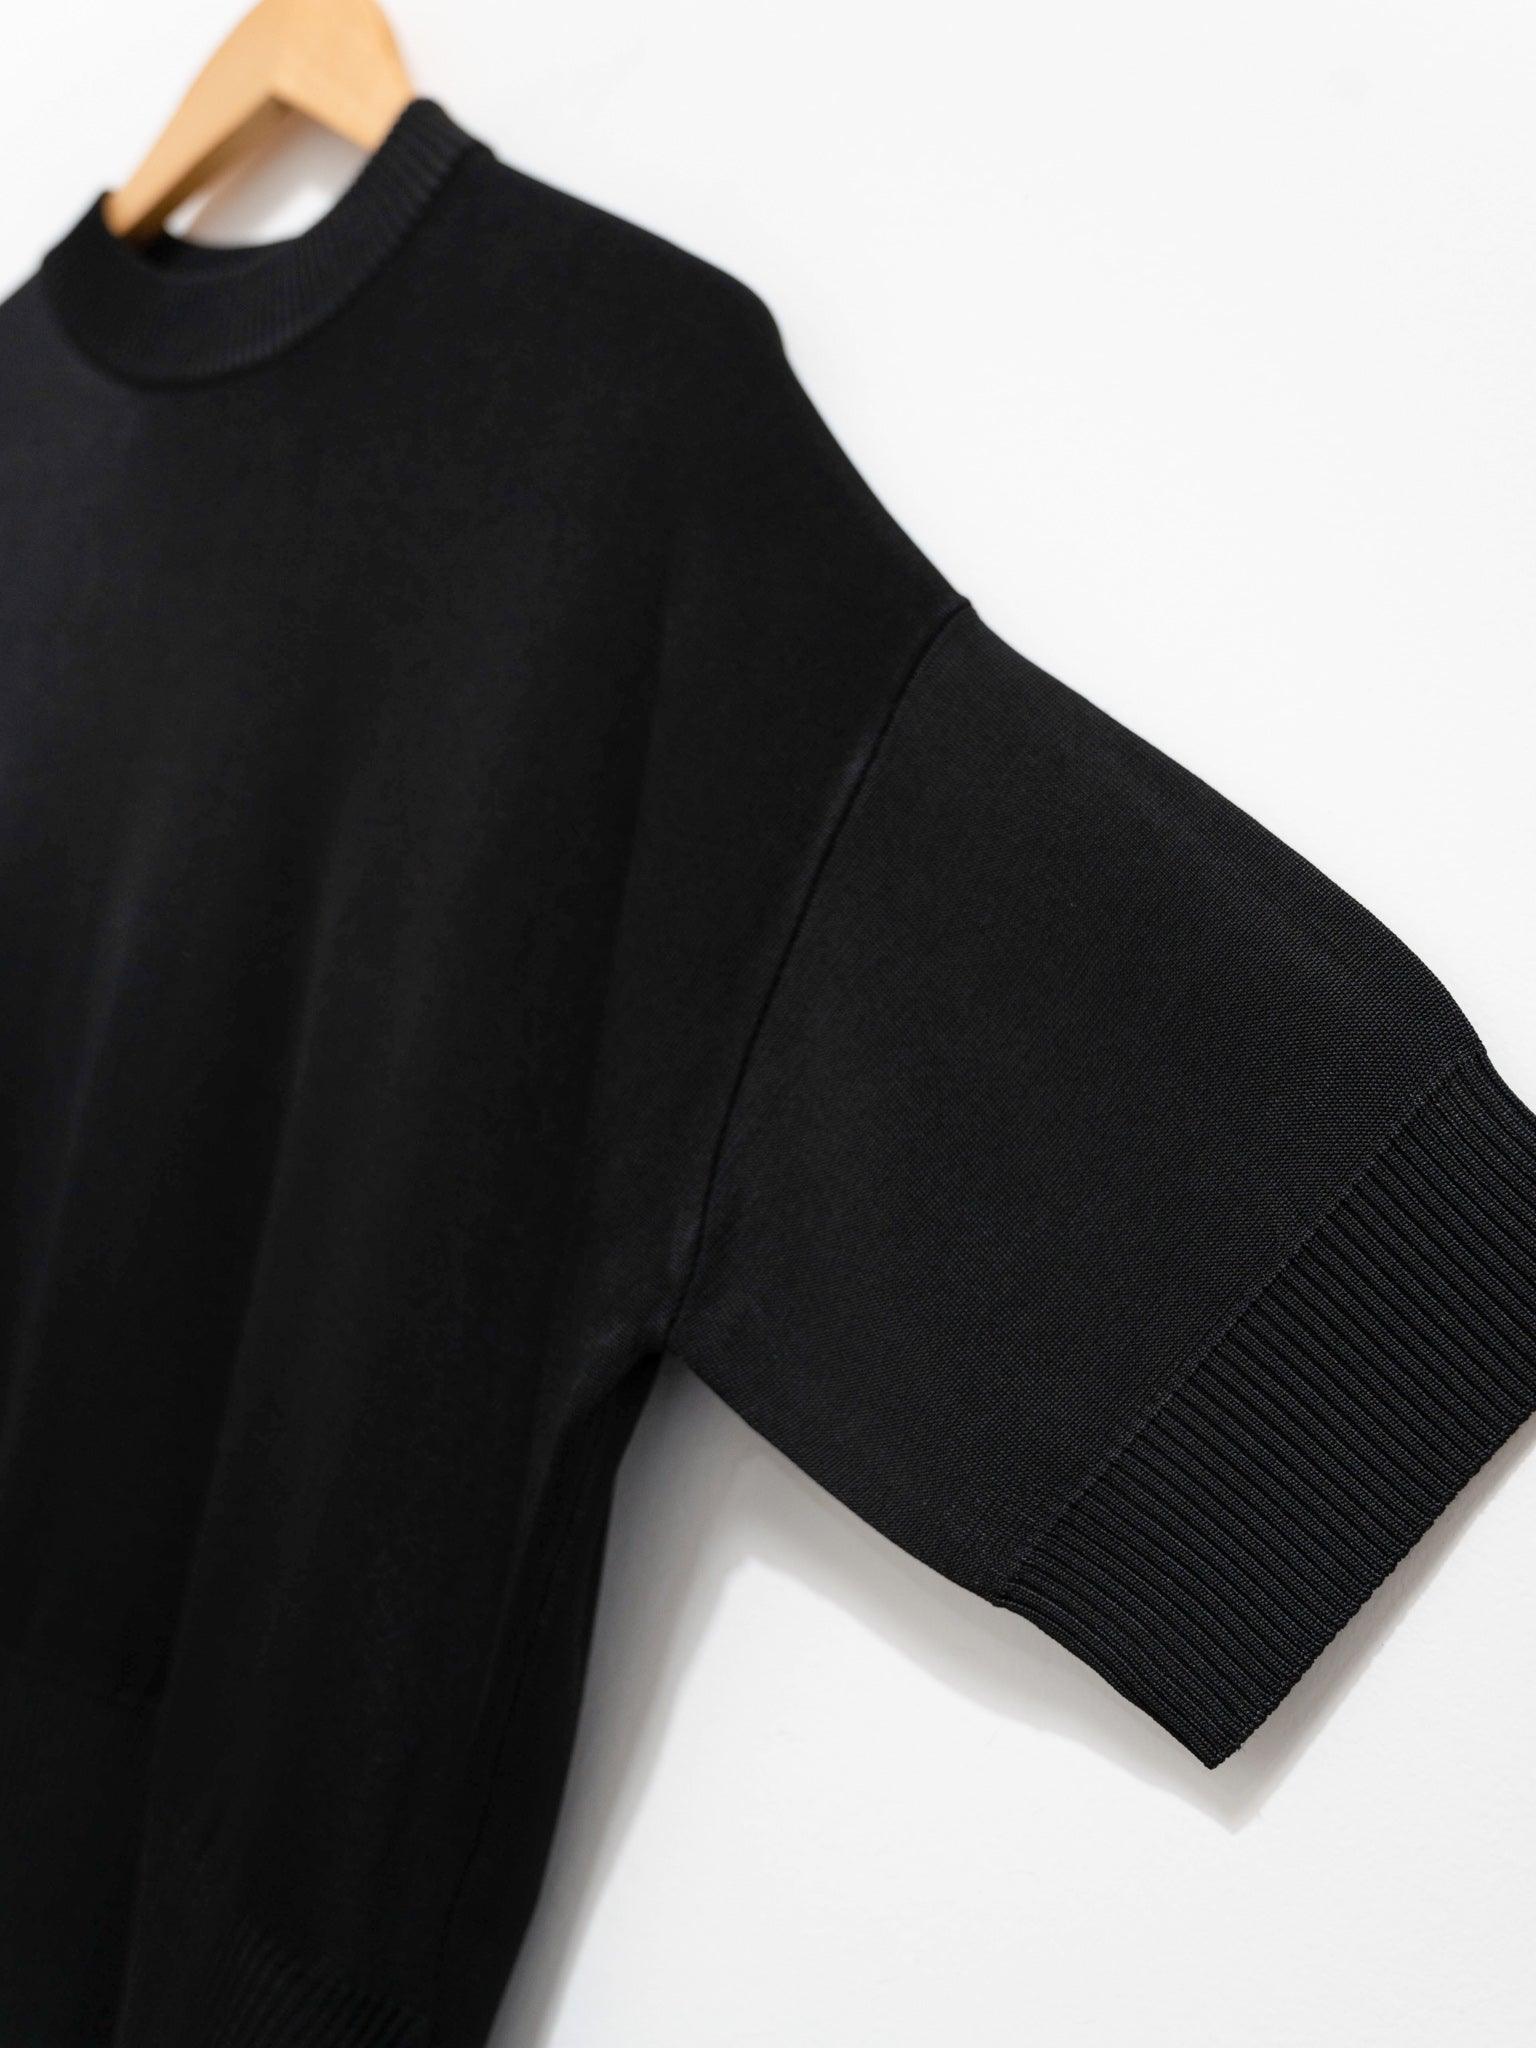 Namu Shop - Studio Nicholson Tonneau Short Sleeve Crewneck Knit - Black